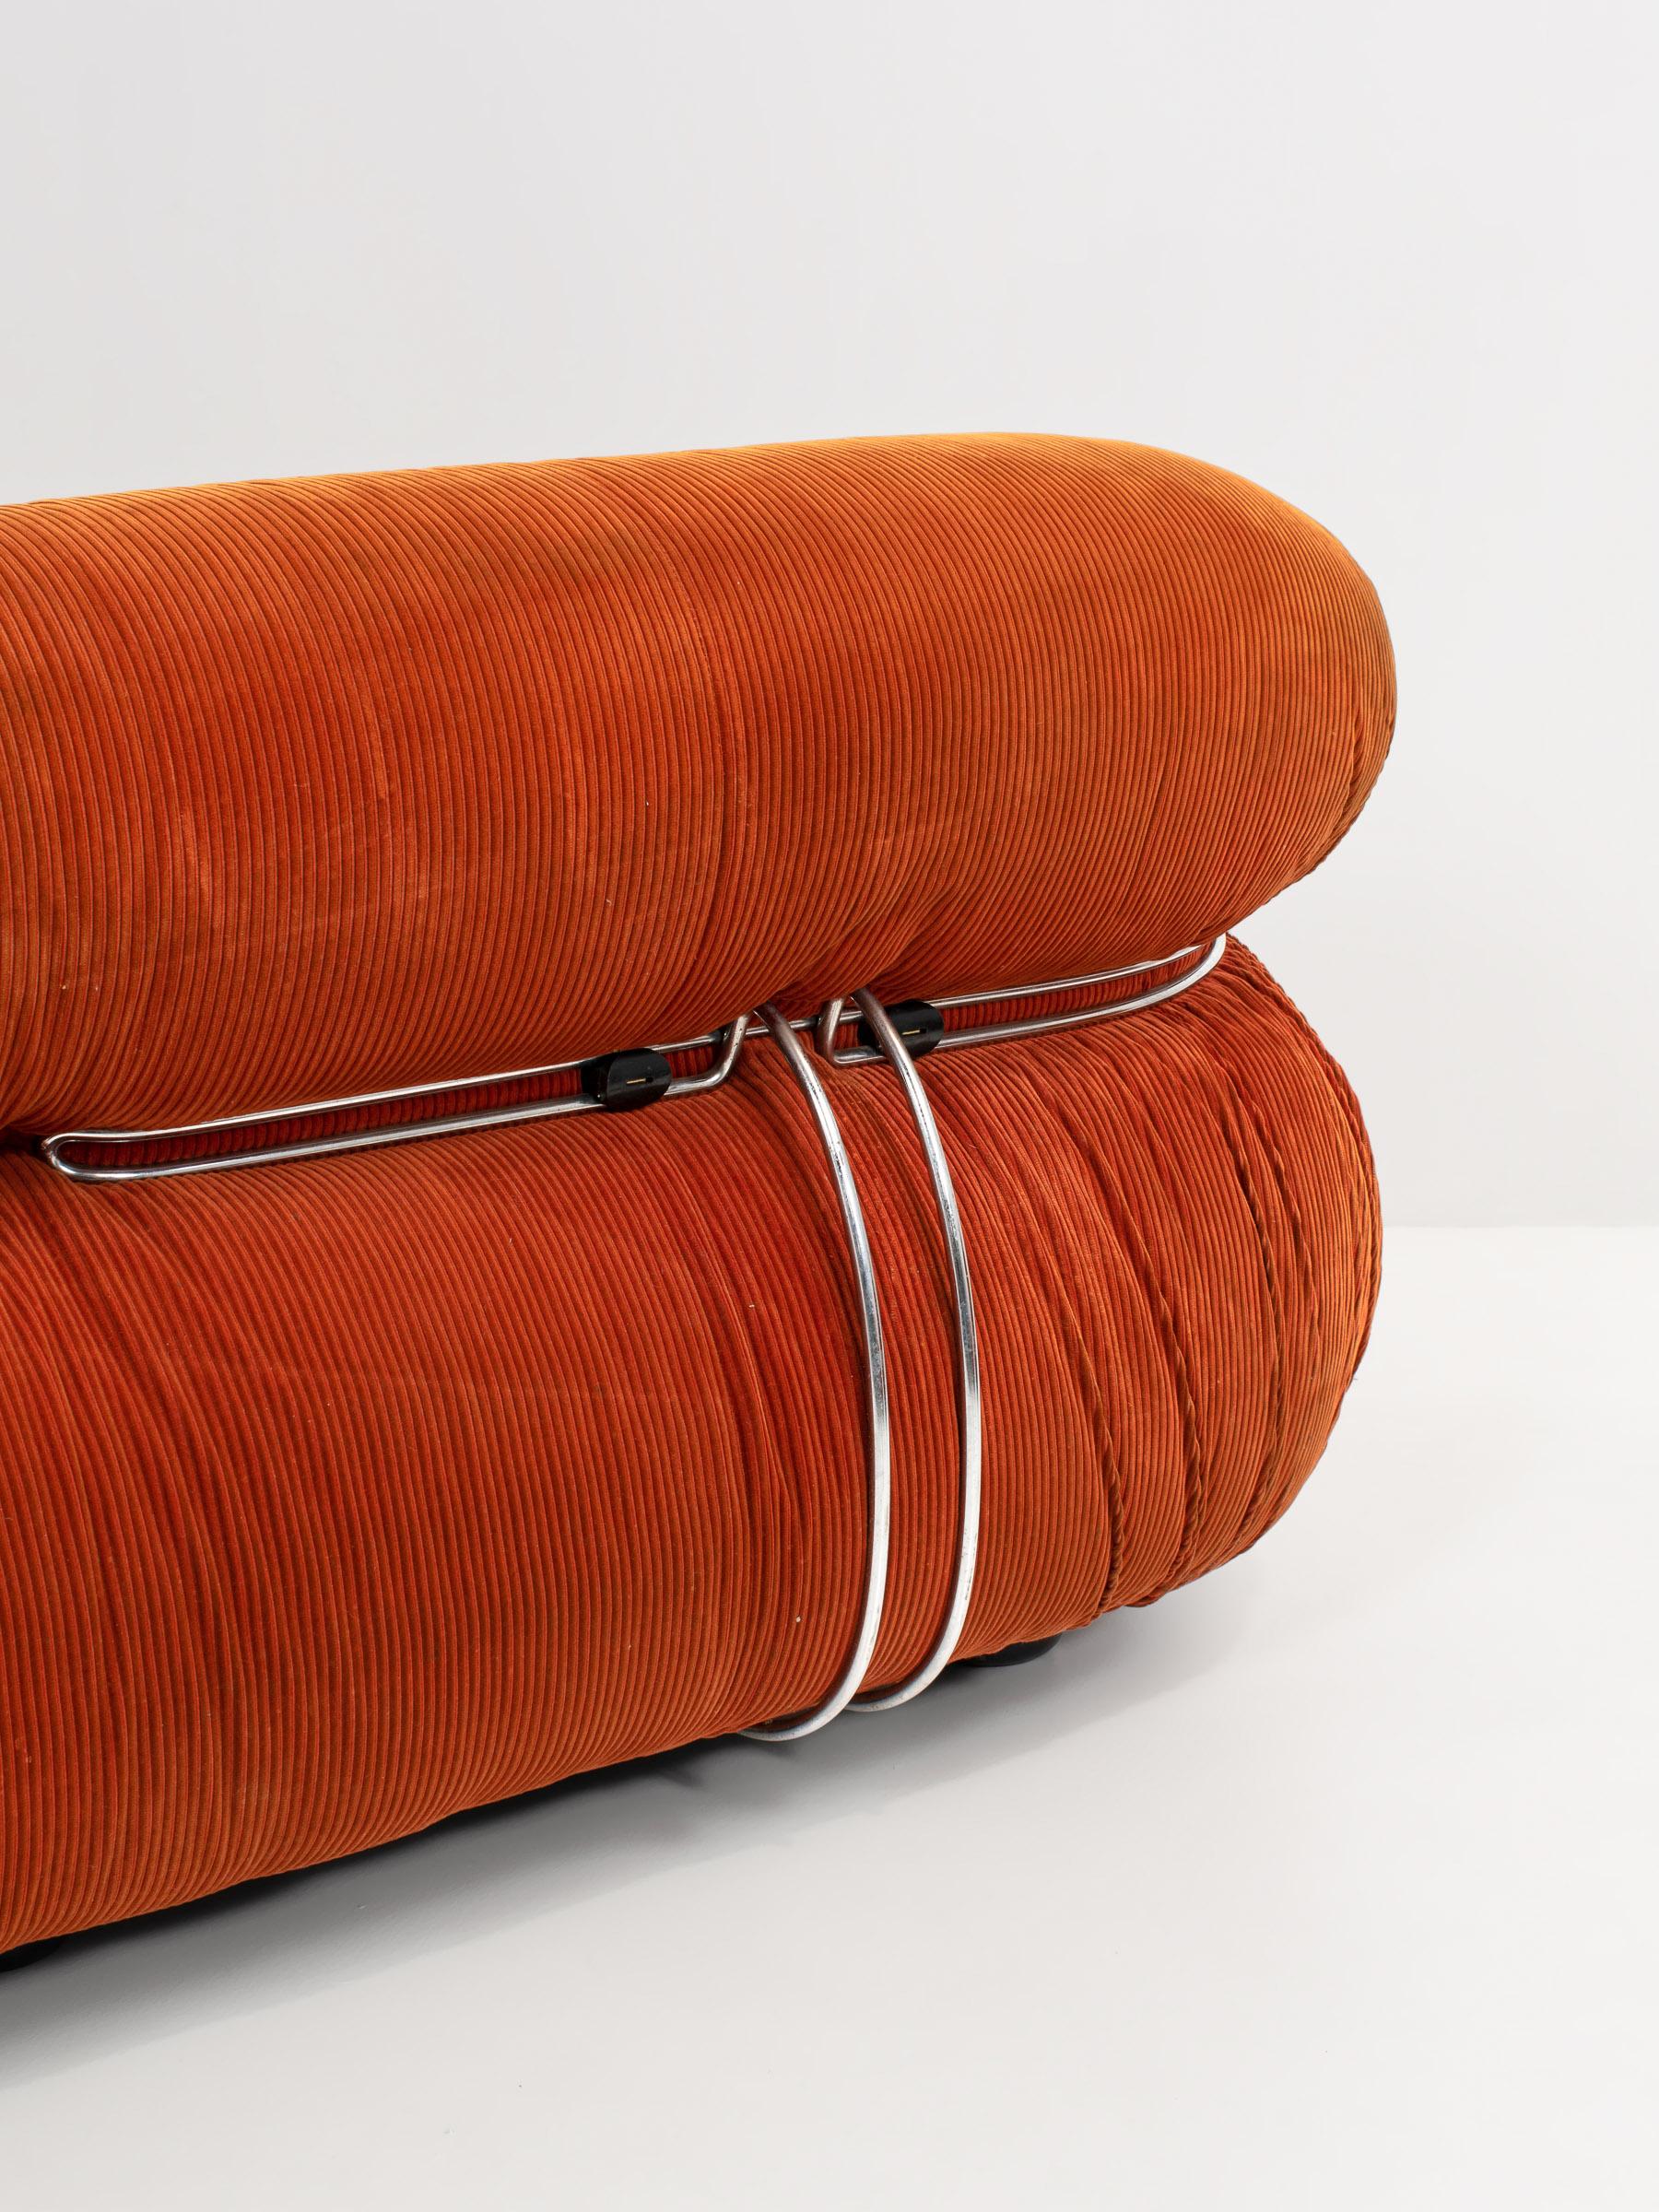 Mid-Century Modern 'Soriana' Sofa by Afra & Tobia Scarpa in Original Corduroy Fabric, 1970s